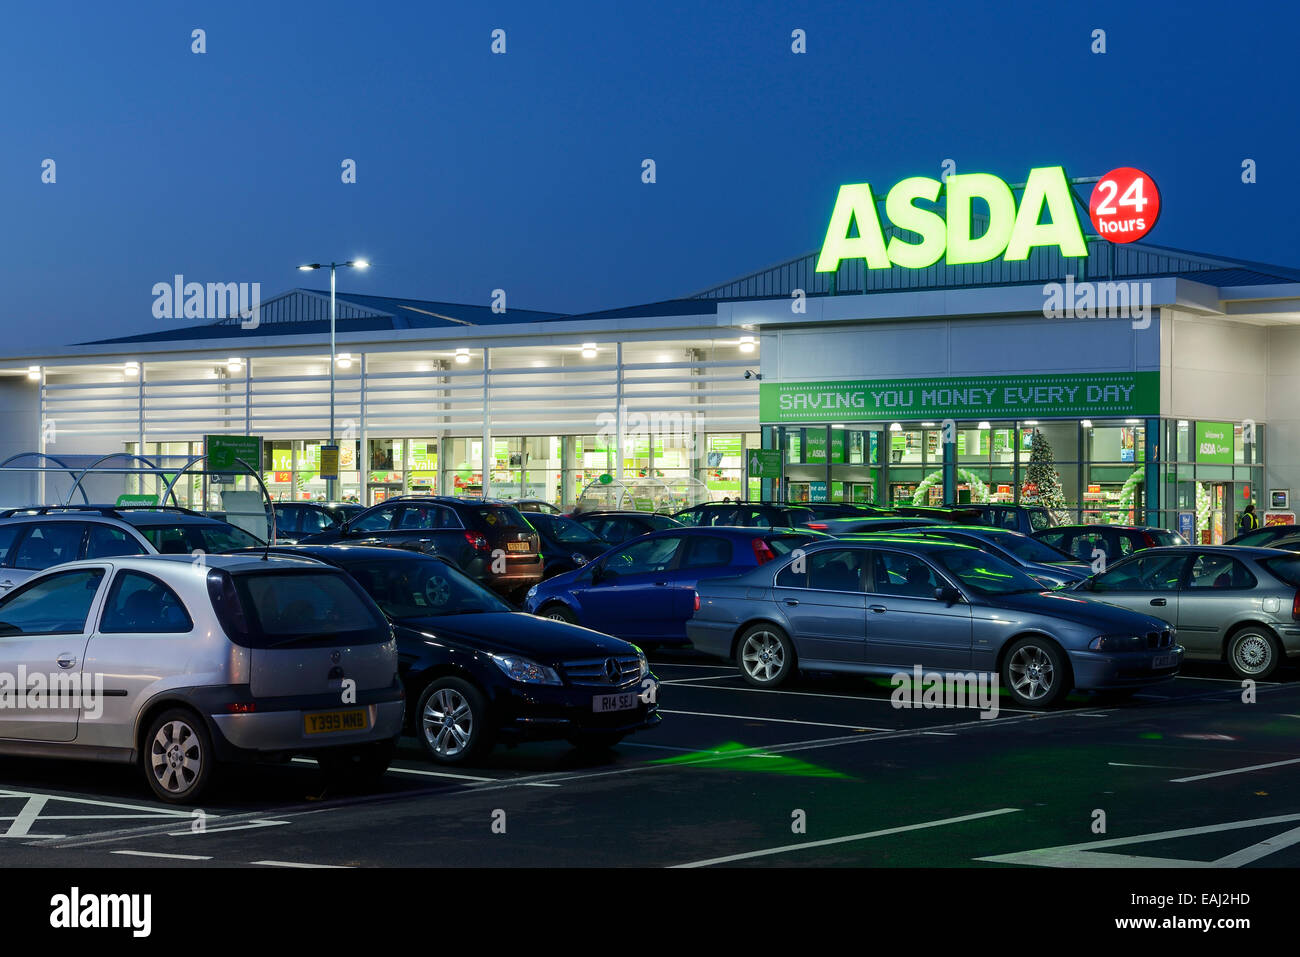 Asda 24 Hour supermarket at night Stock Photo